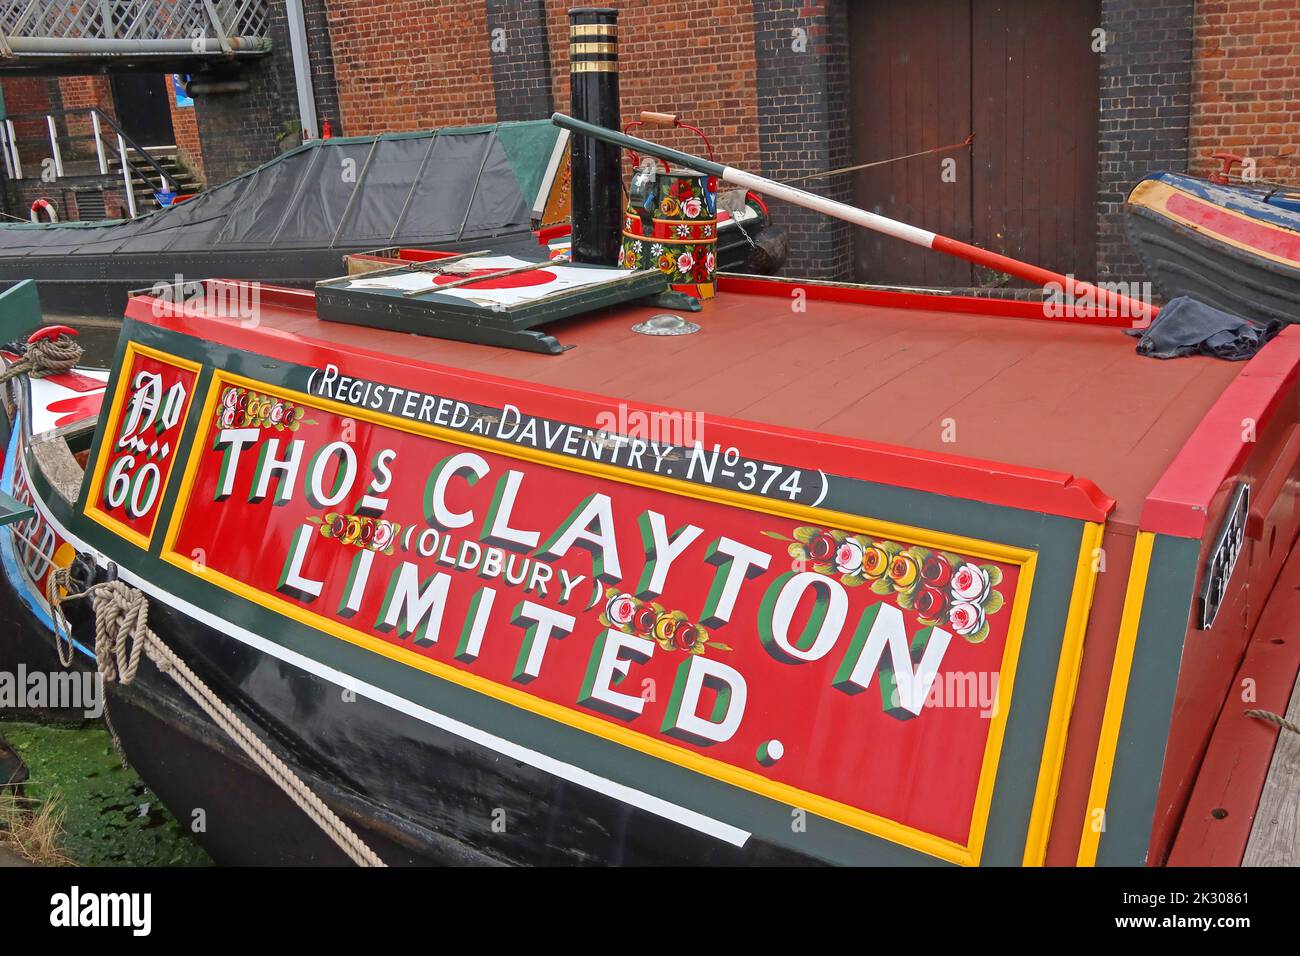 AO,60, Thos Clayton Limited, Oldbury, Registered at Daventry No 374- Narrowboats on historic English canals, Cheshire, England, UK Stock Photo